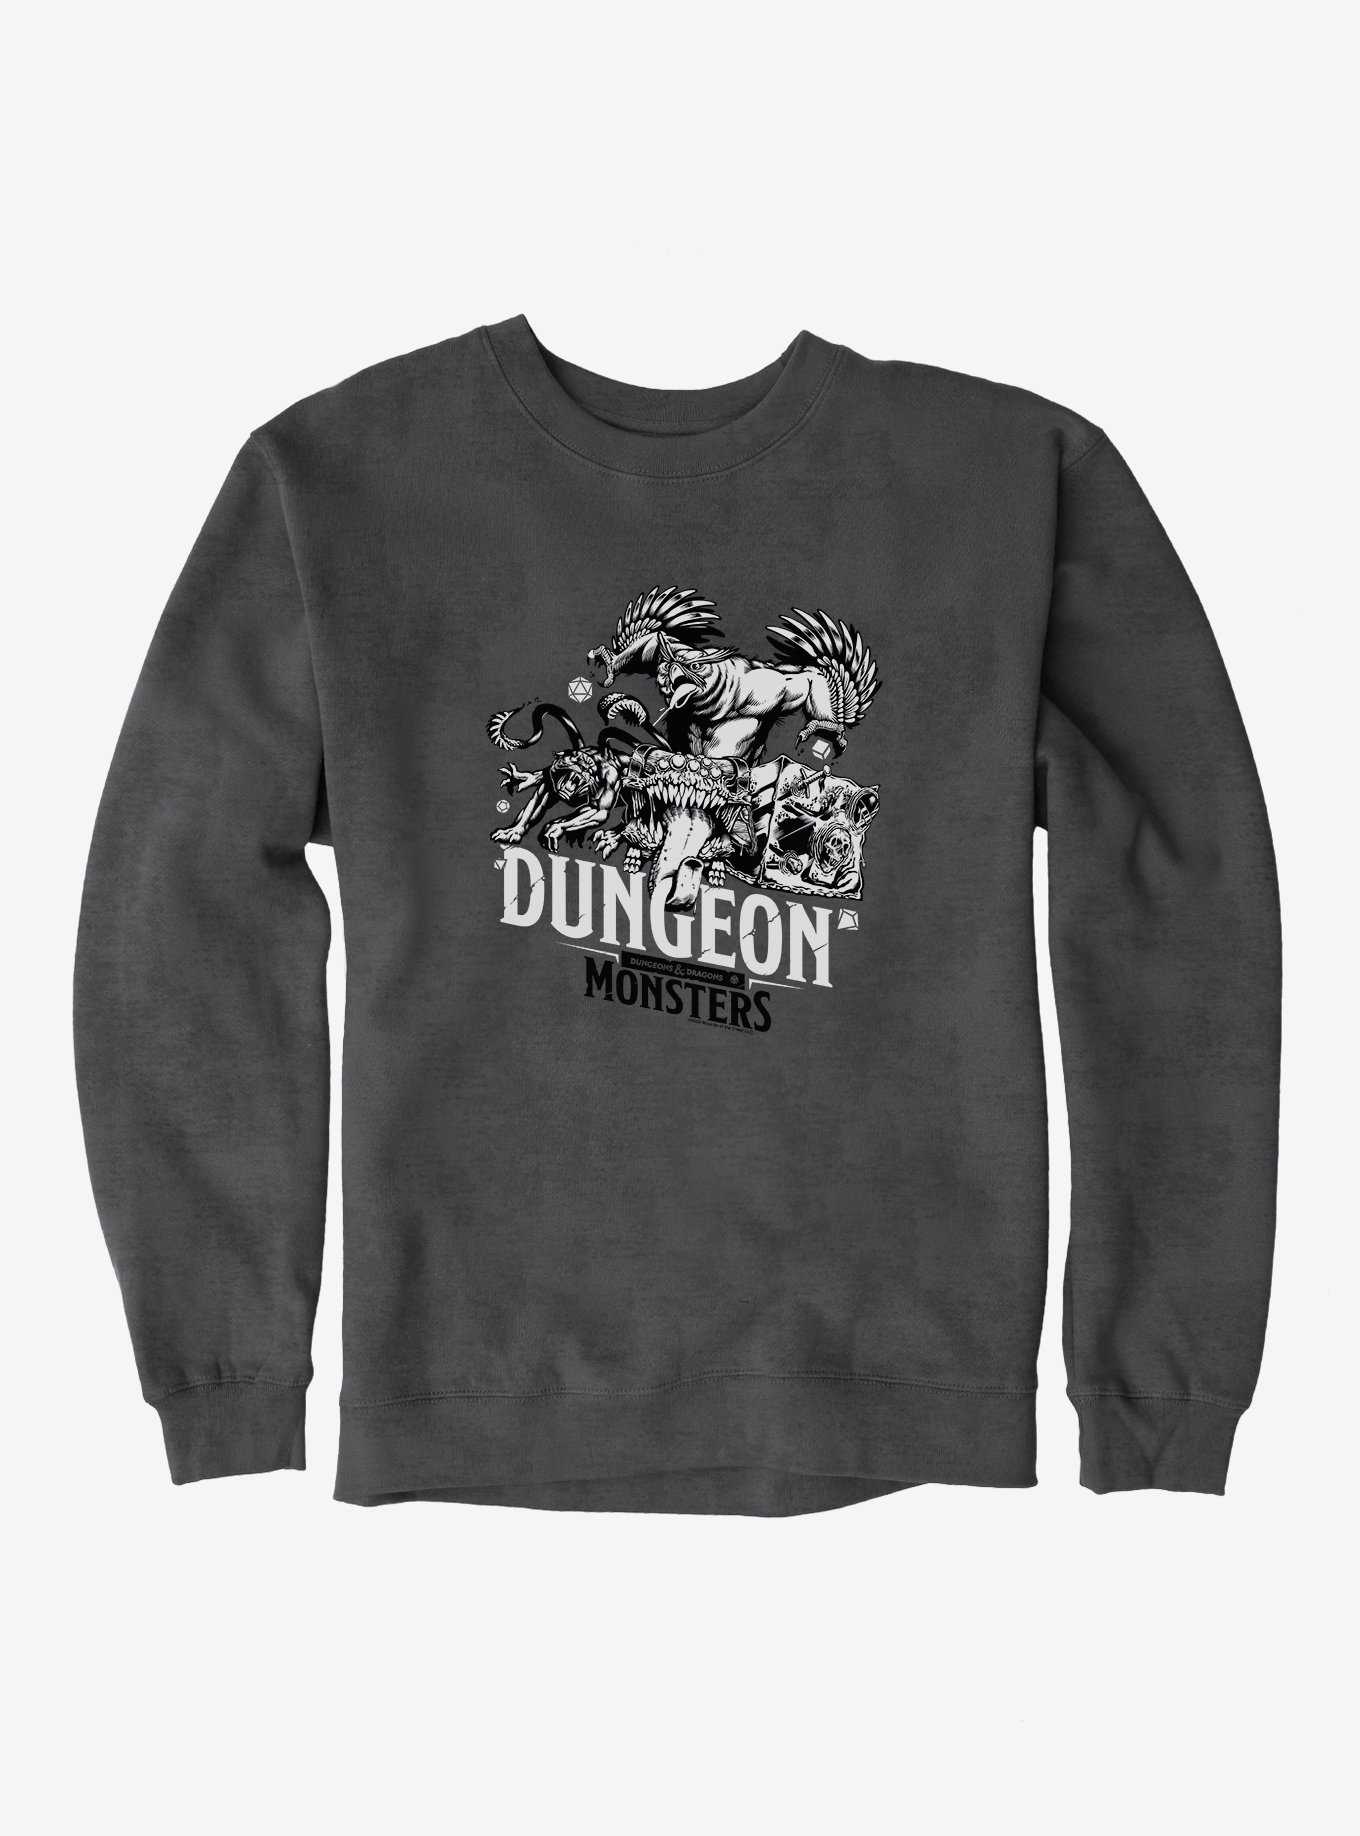 Dungeons & Dragons Monsters Group Sweatshirt, , hi-res